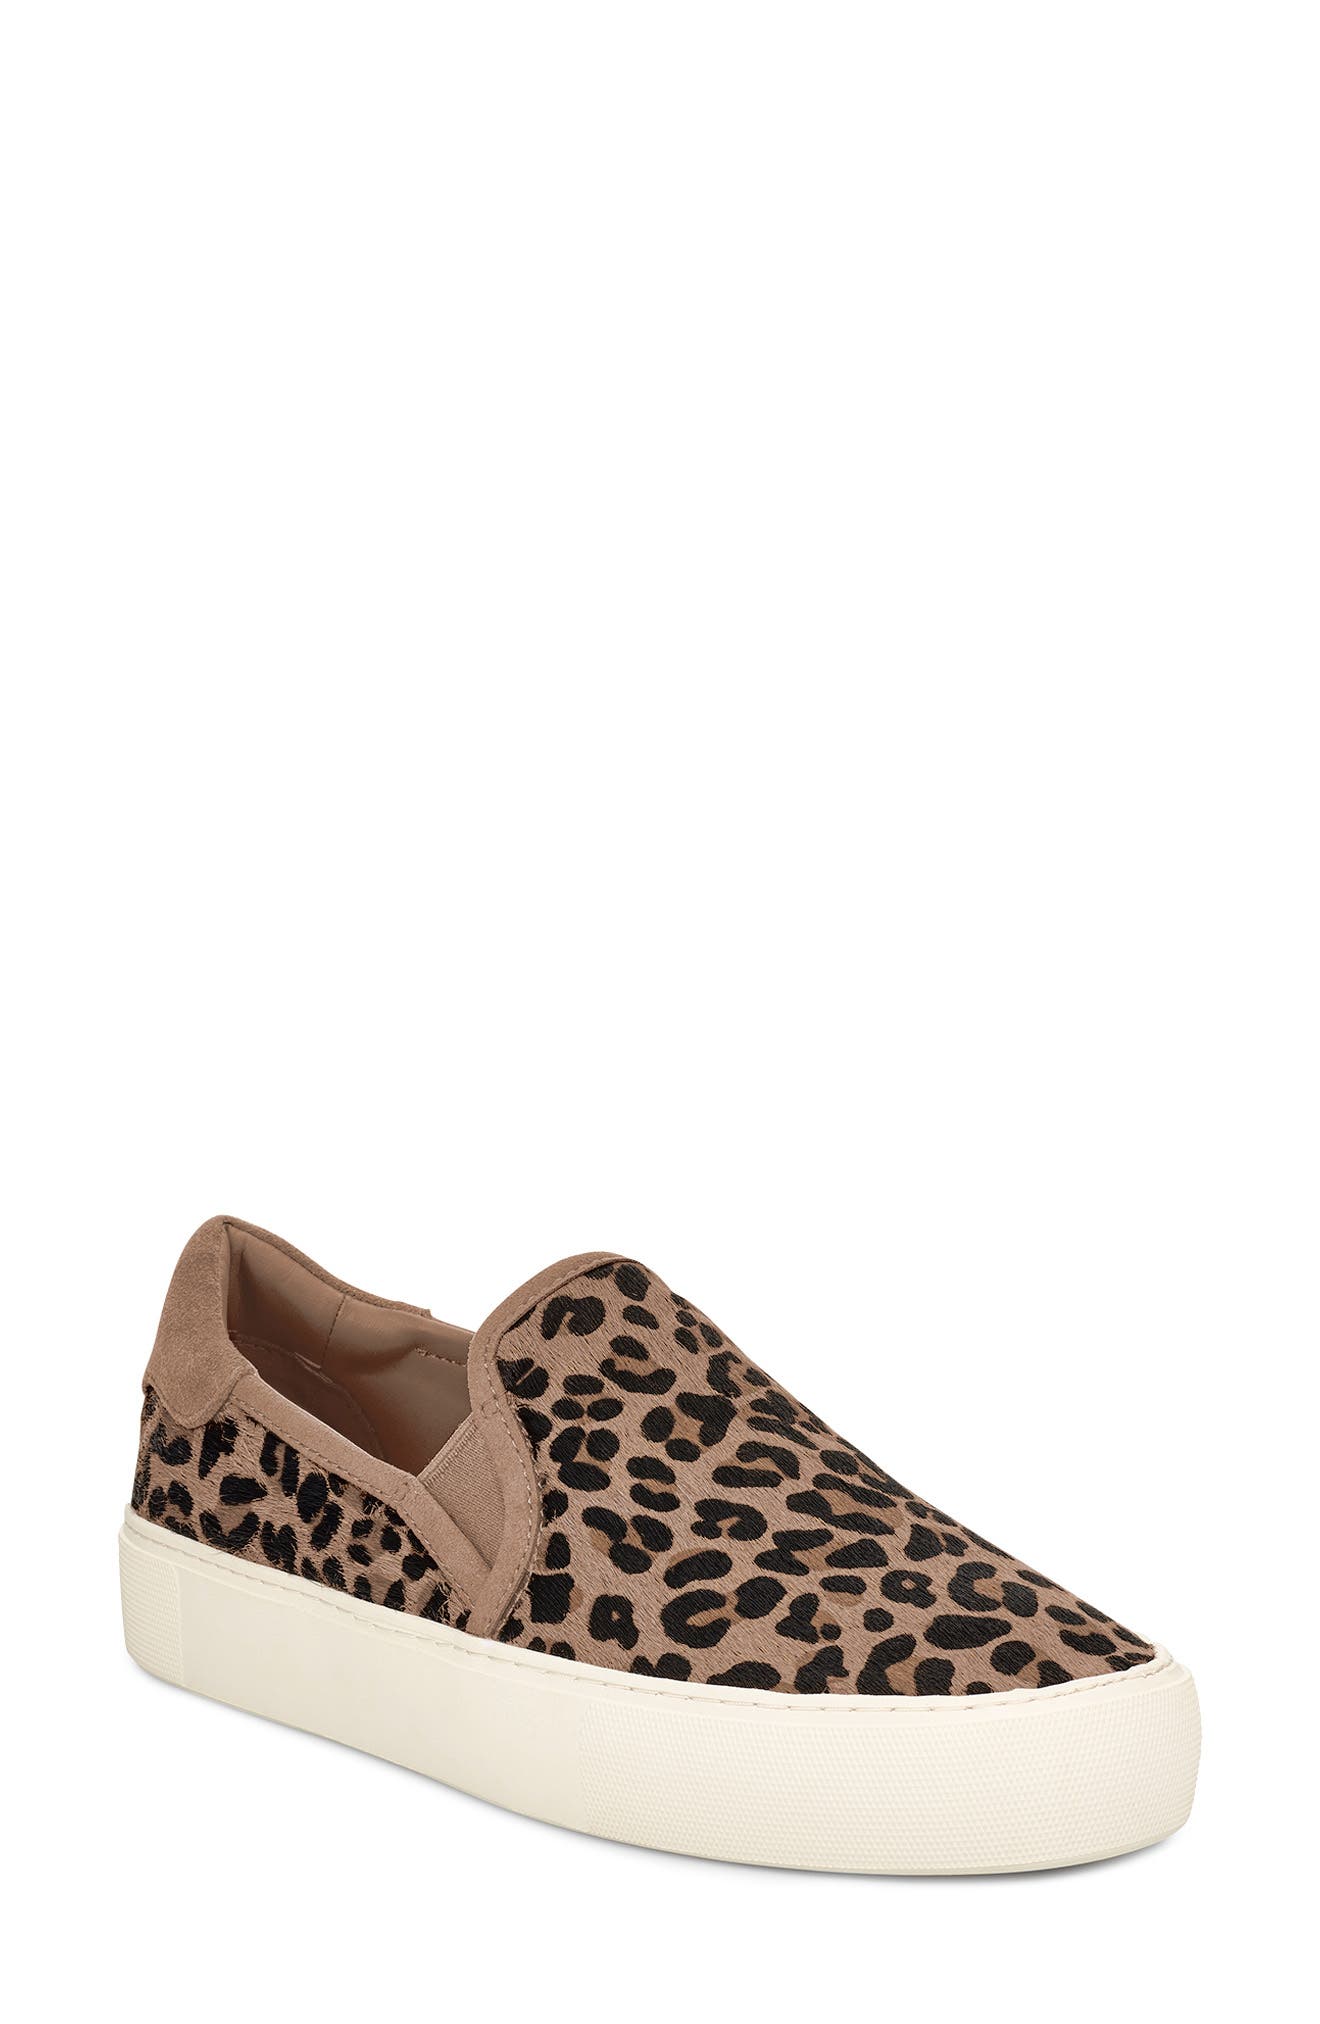 slip on sneakers leopard print